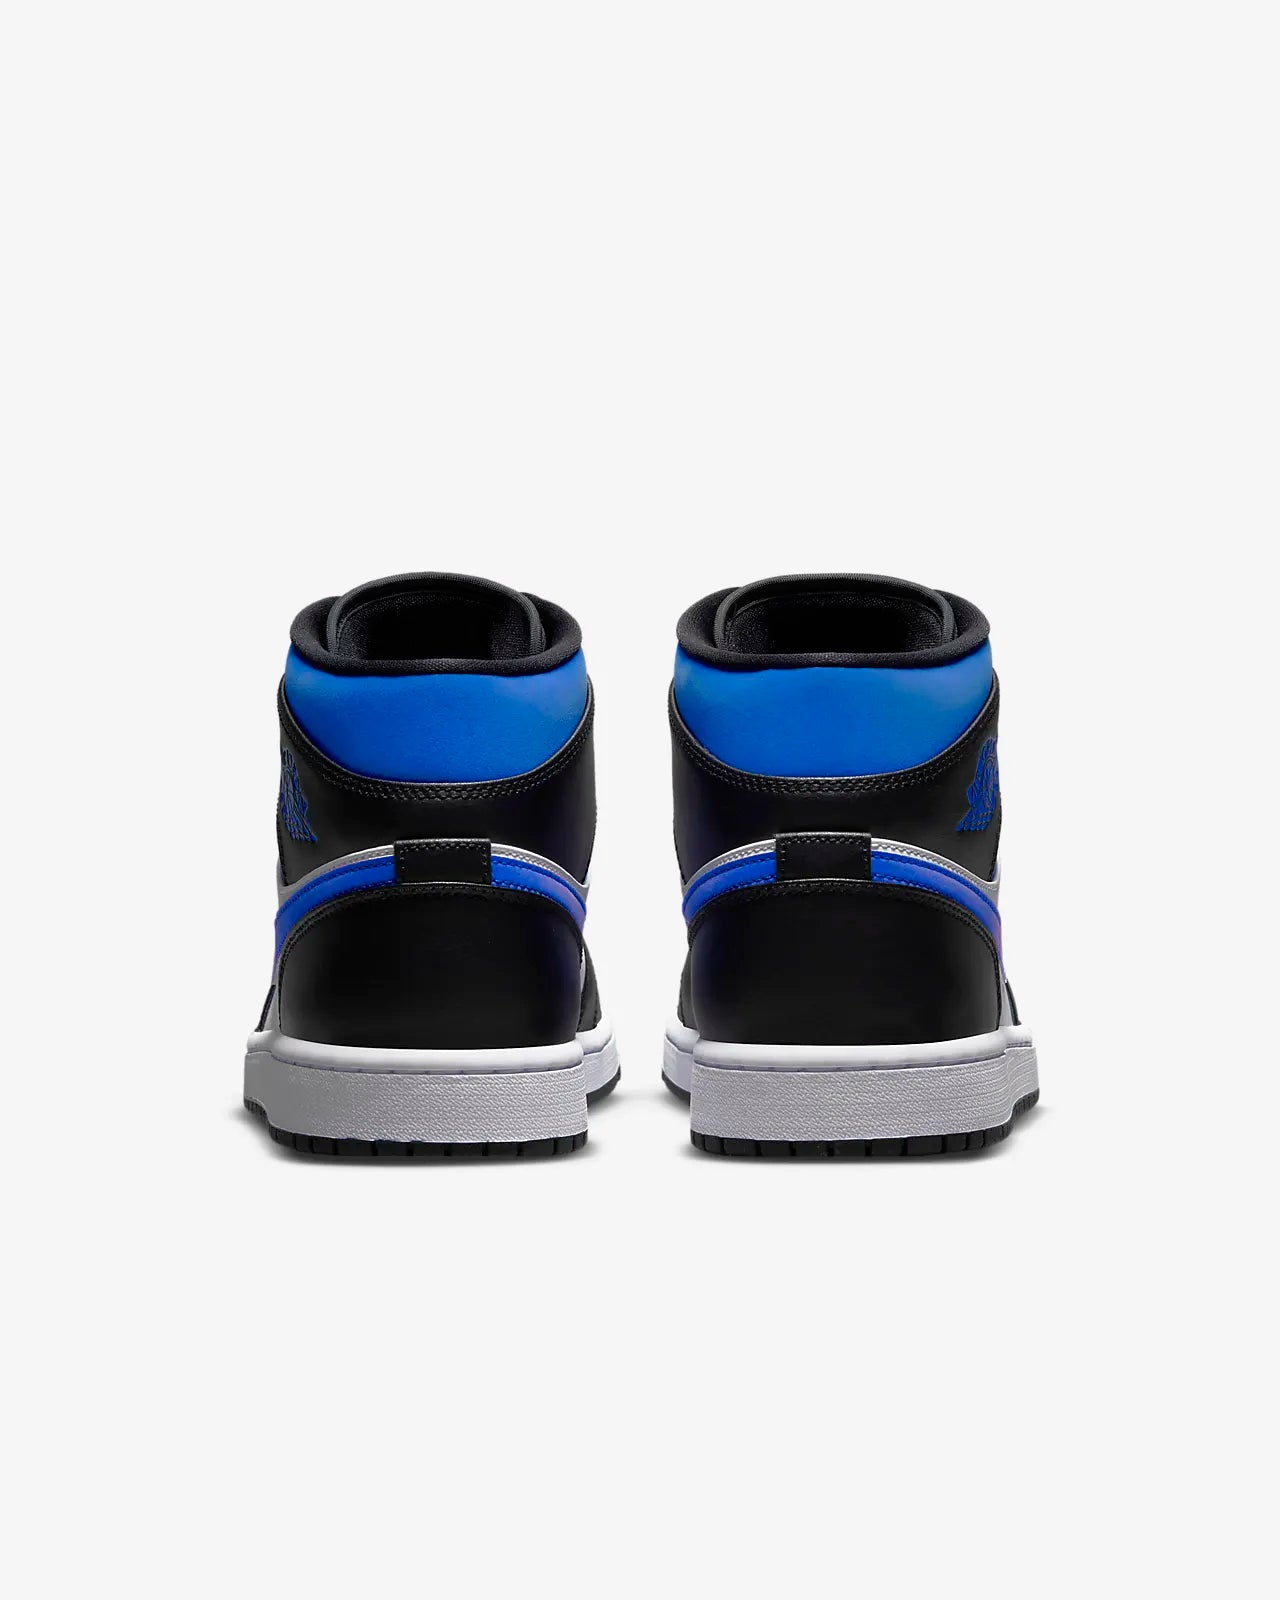 Nike - Air Jordan 1 Mid - Racer Blue